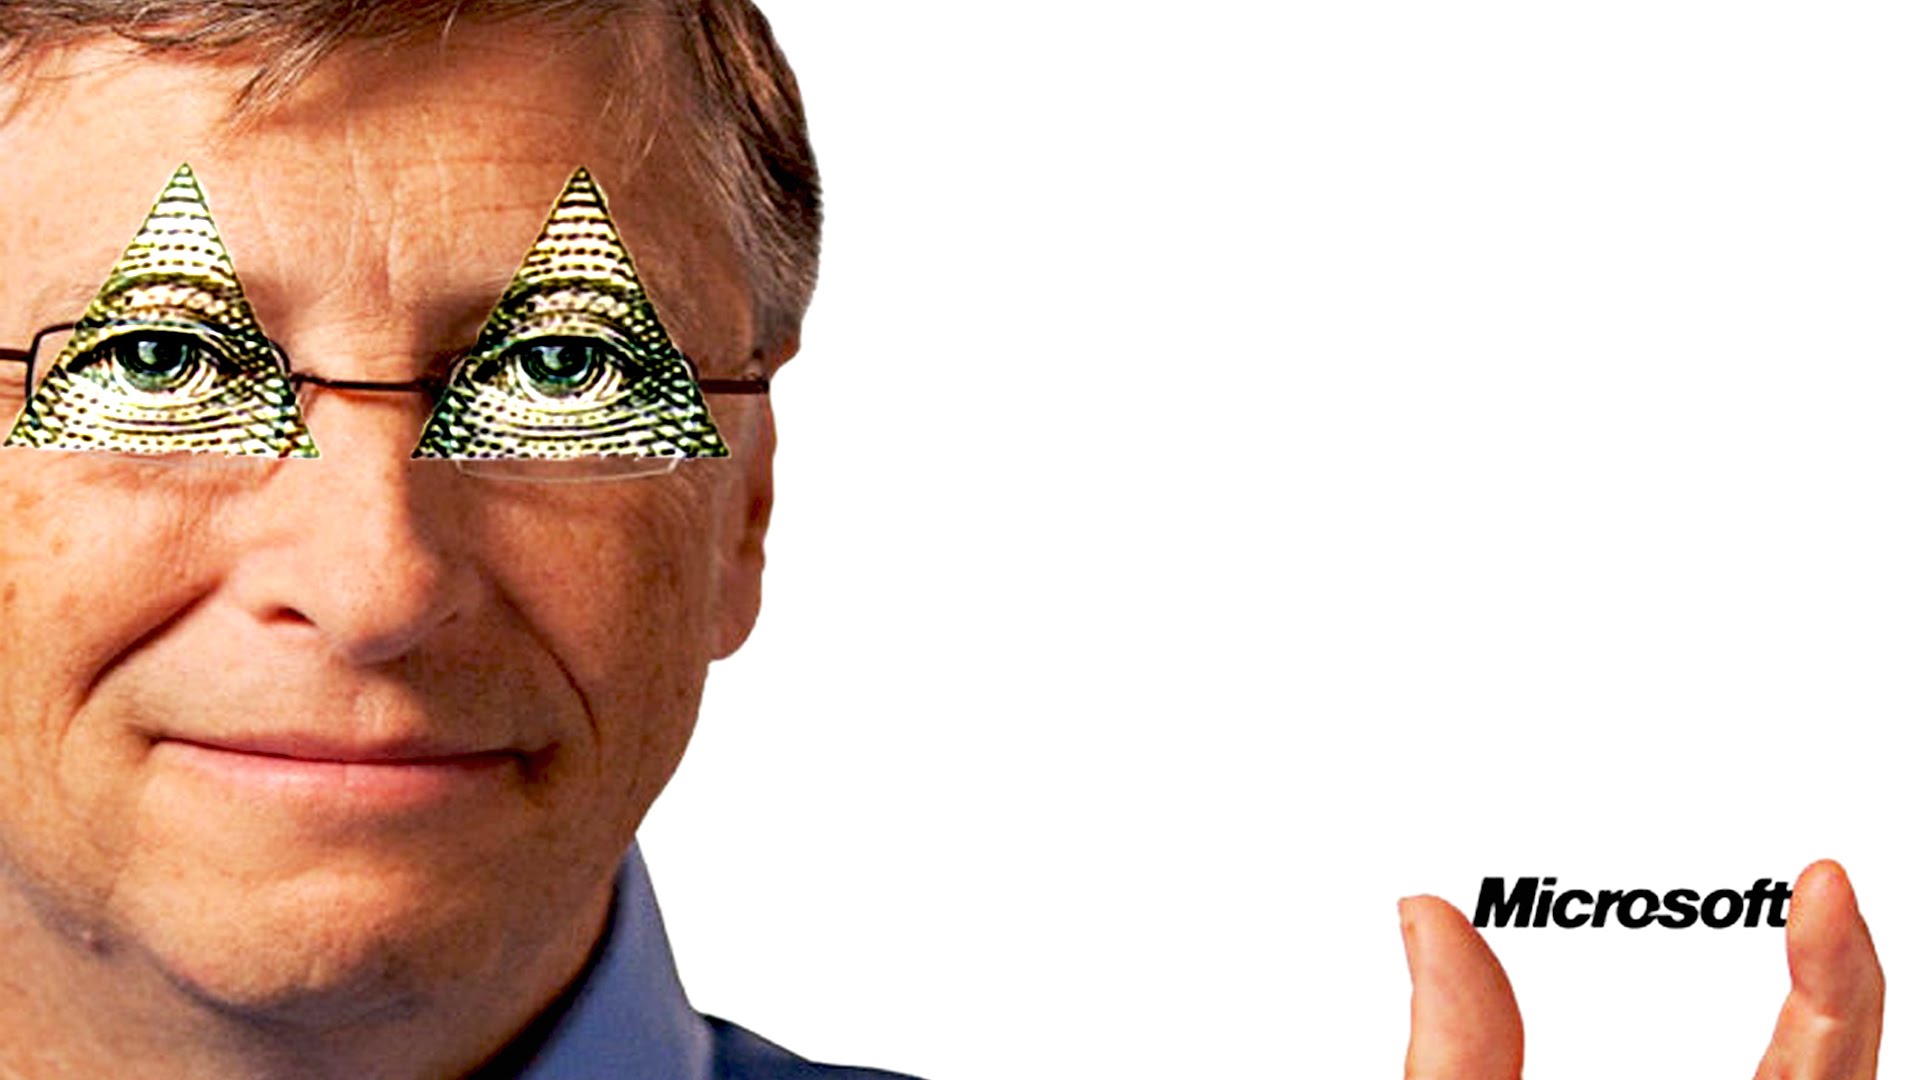 Microsoft is Illuminati